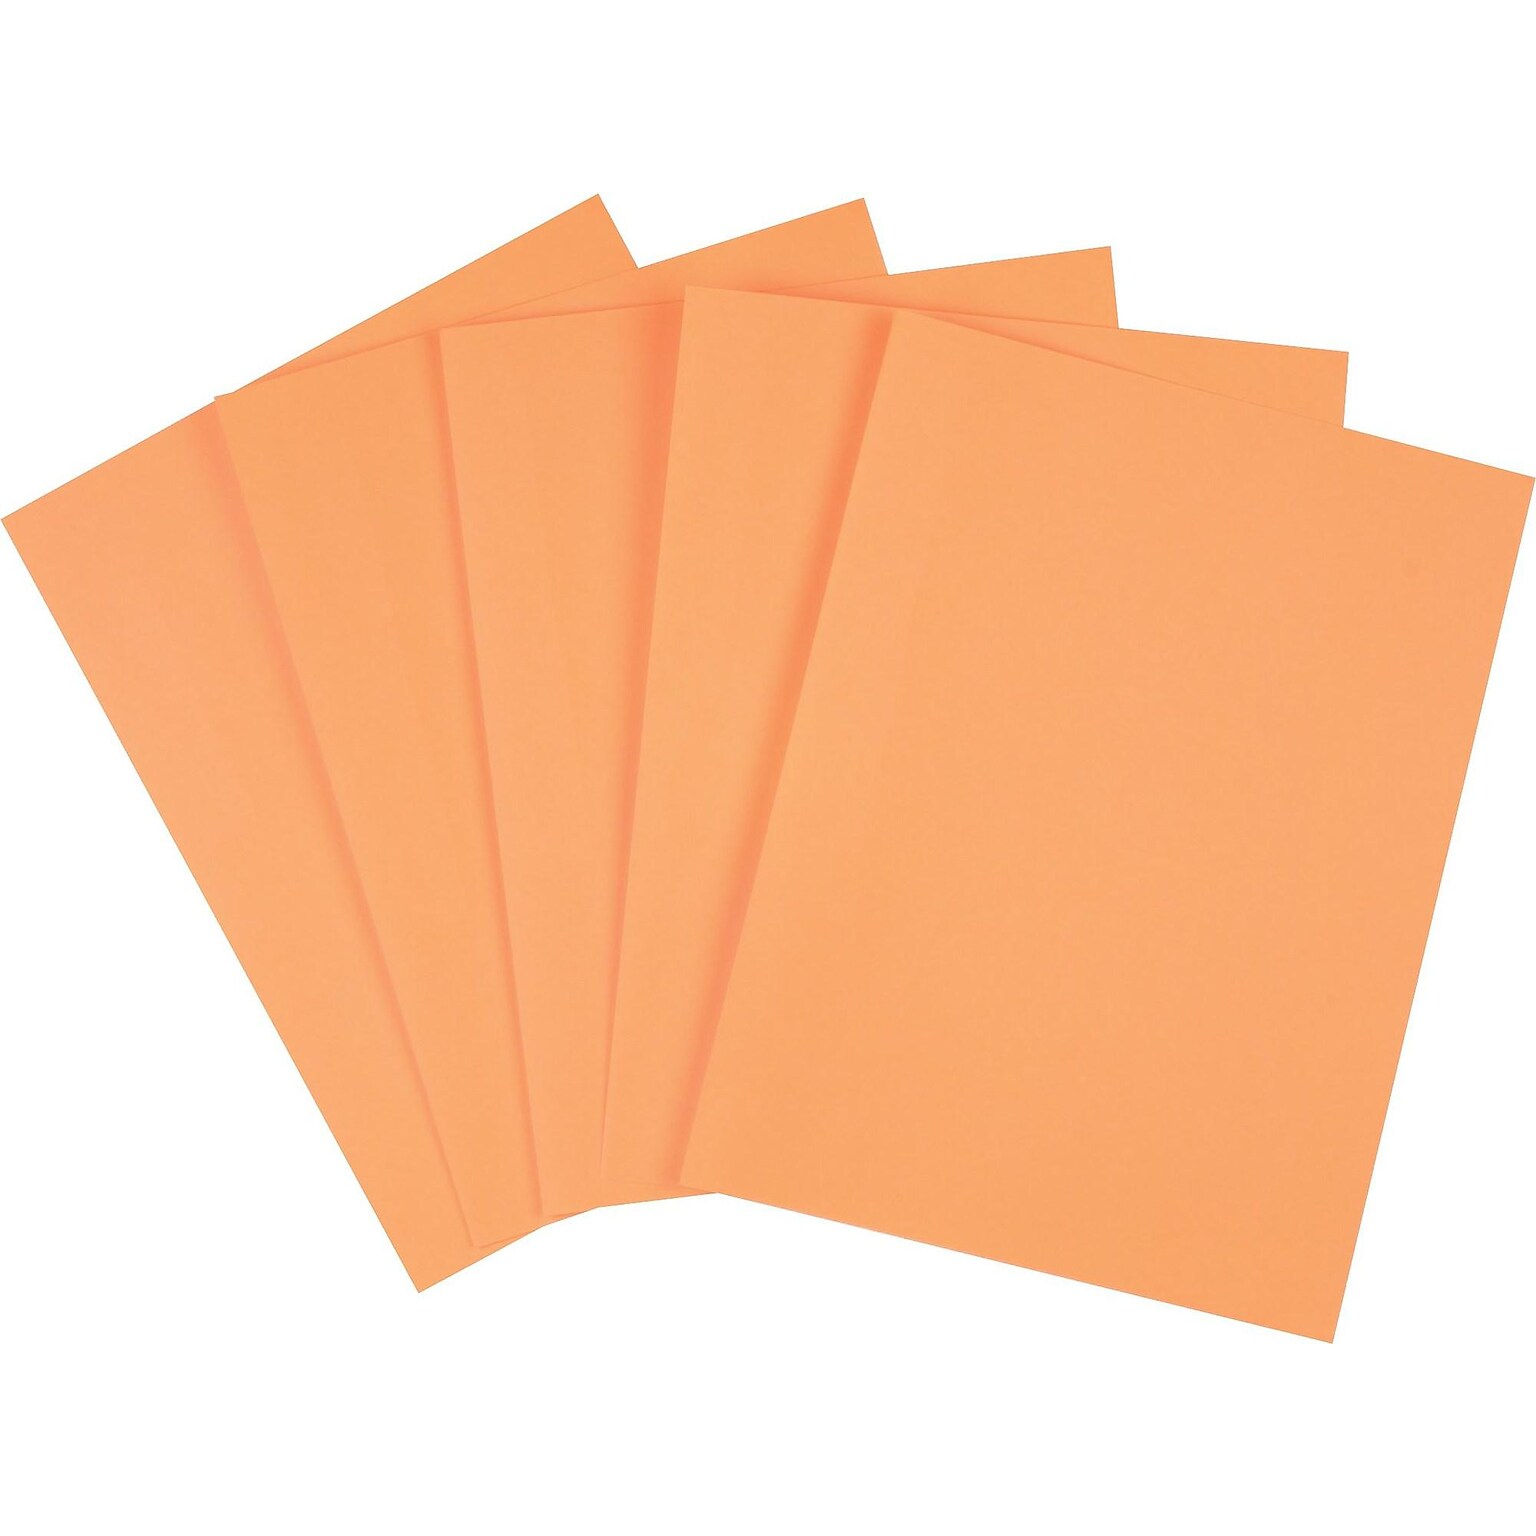 Staples Brights Multipurpose Colored Paper, 20 lb, 8.5 x 11, Orange, 500/Ream, 5 Reams/Carton (25208A)